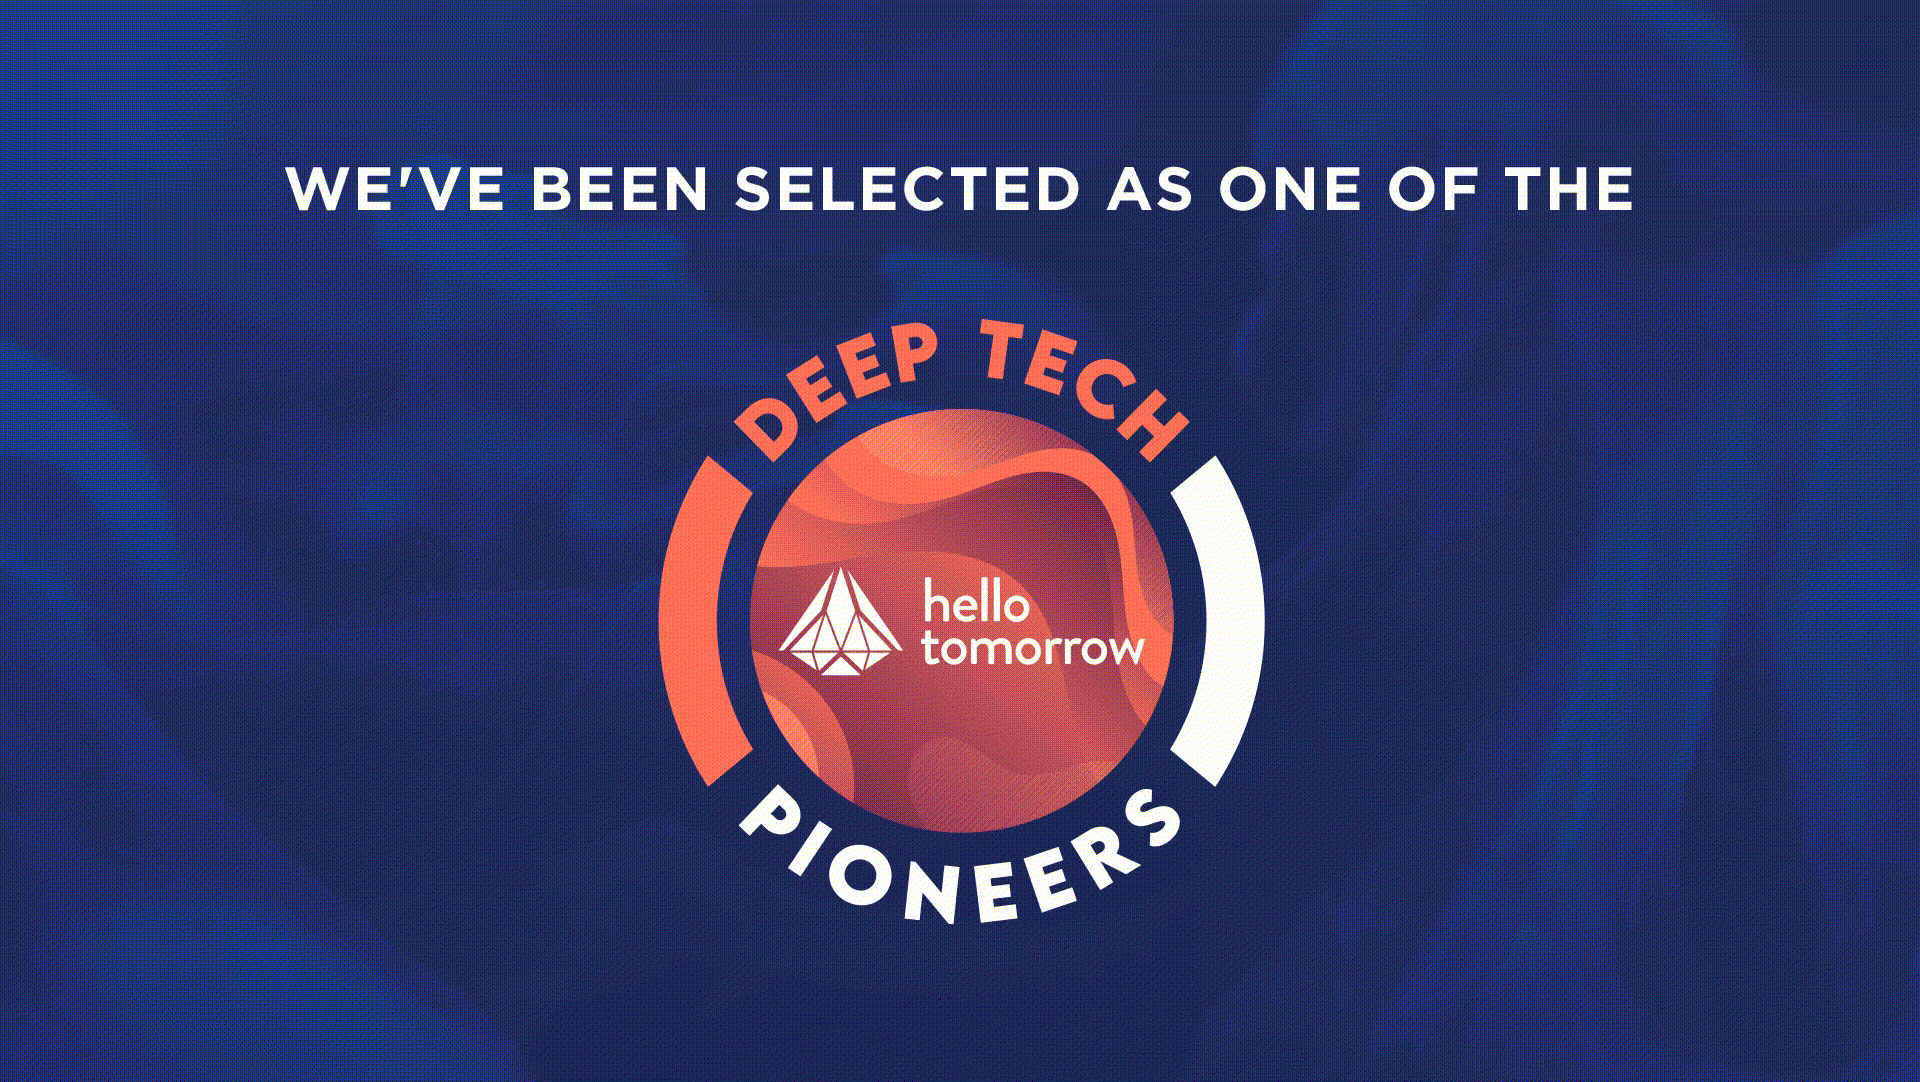 Jaxaベンチャー 天地人 世界最大のディープテックコミュニティ Hello Tomorrow が選ぶ有望なプロジェクト Deep Tech Pioneer に選出 株式会社天地人のプレスリリース